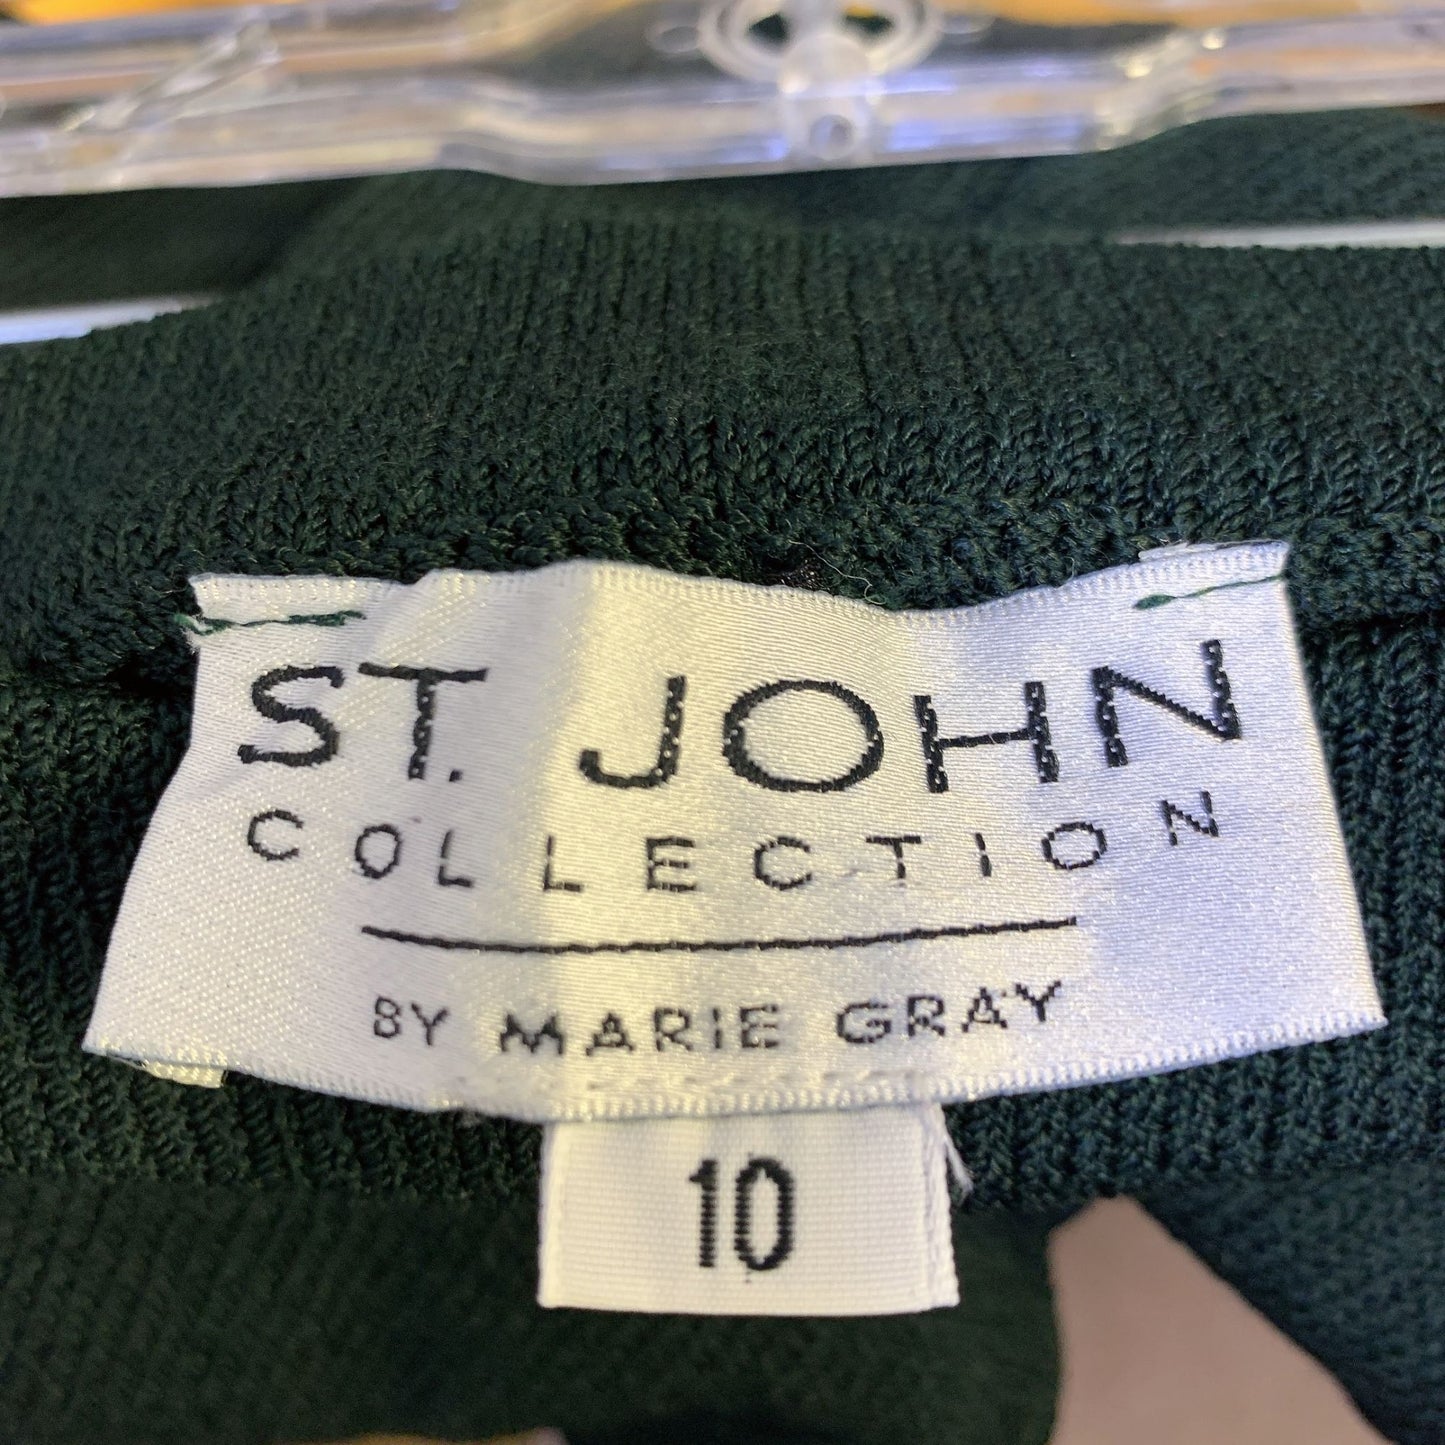 St. John Collection Green Knit Pants Size 10